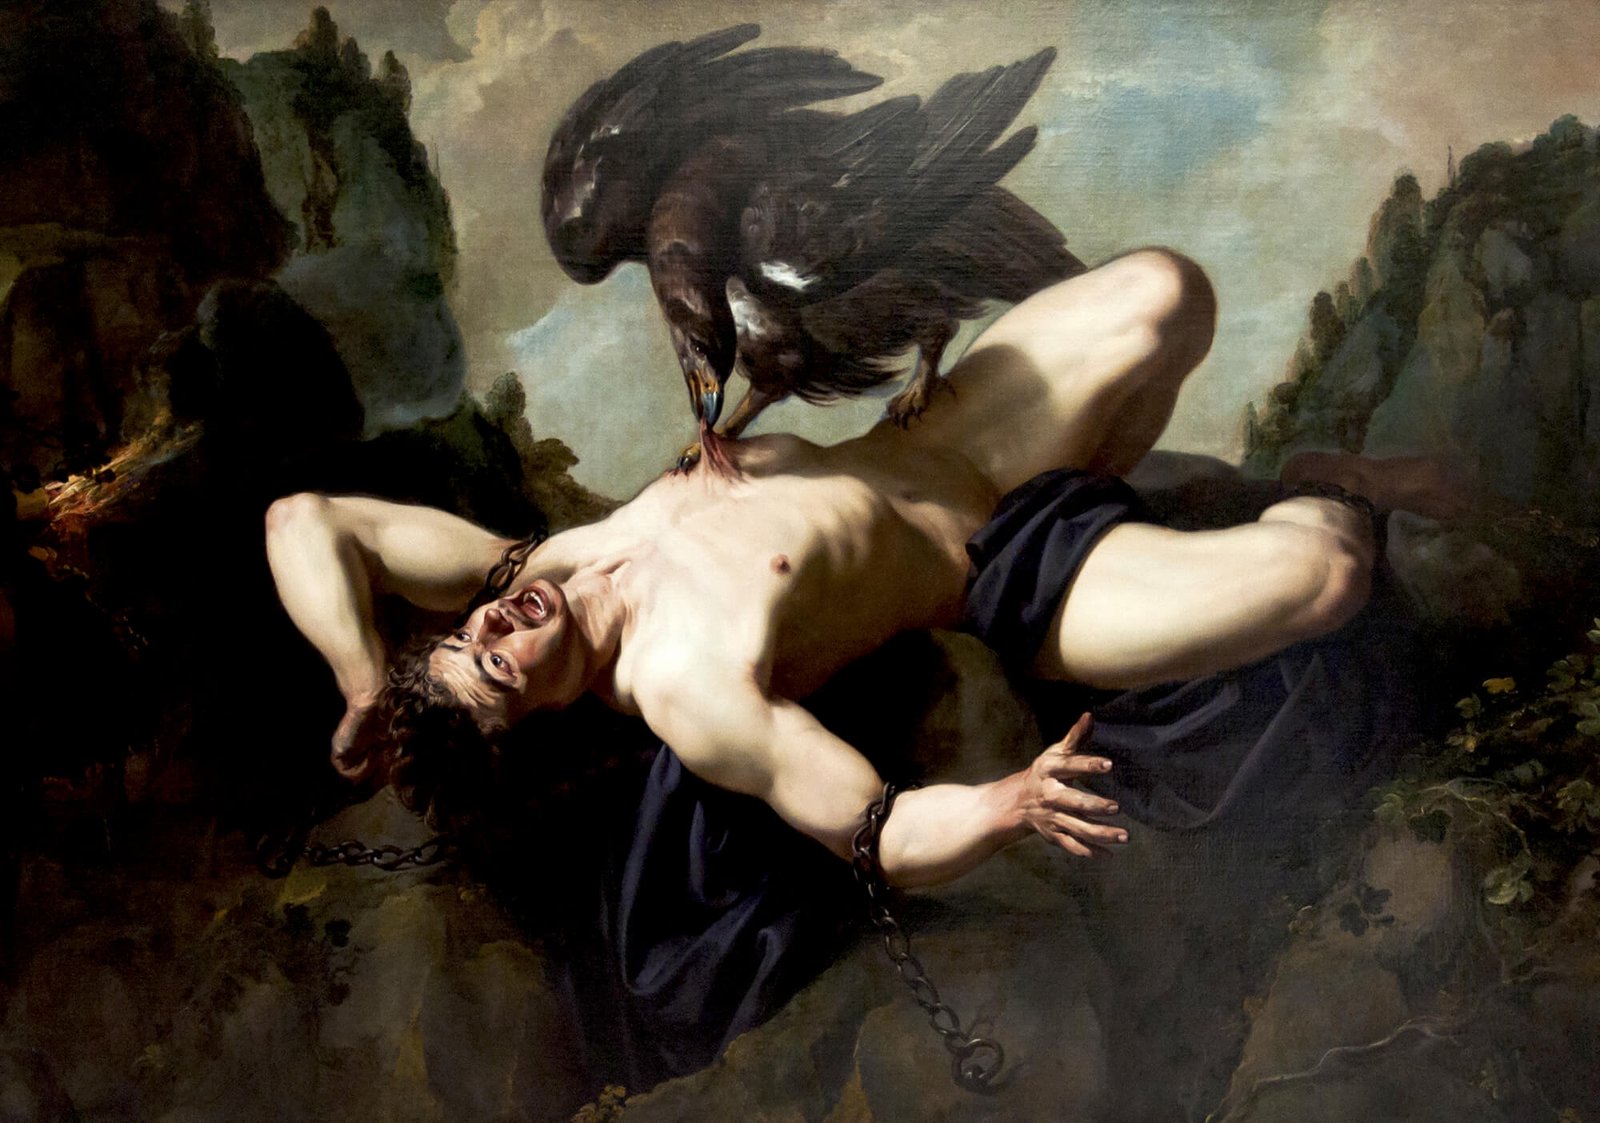 This painting represents the Caucasian eagle devouring Prometheus' liver.